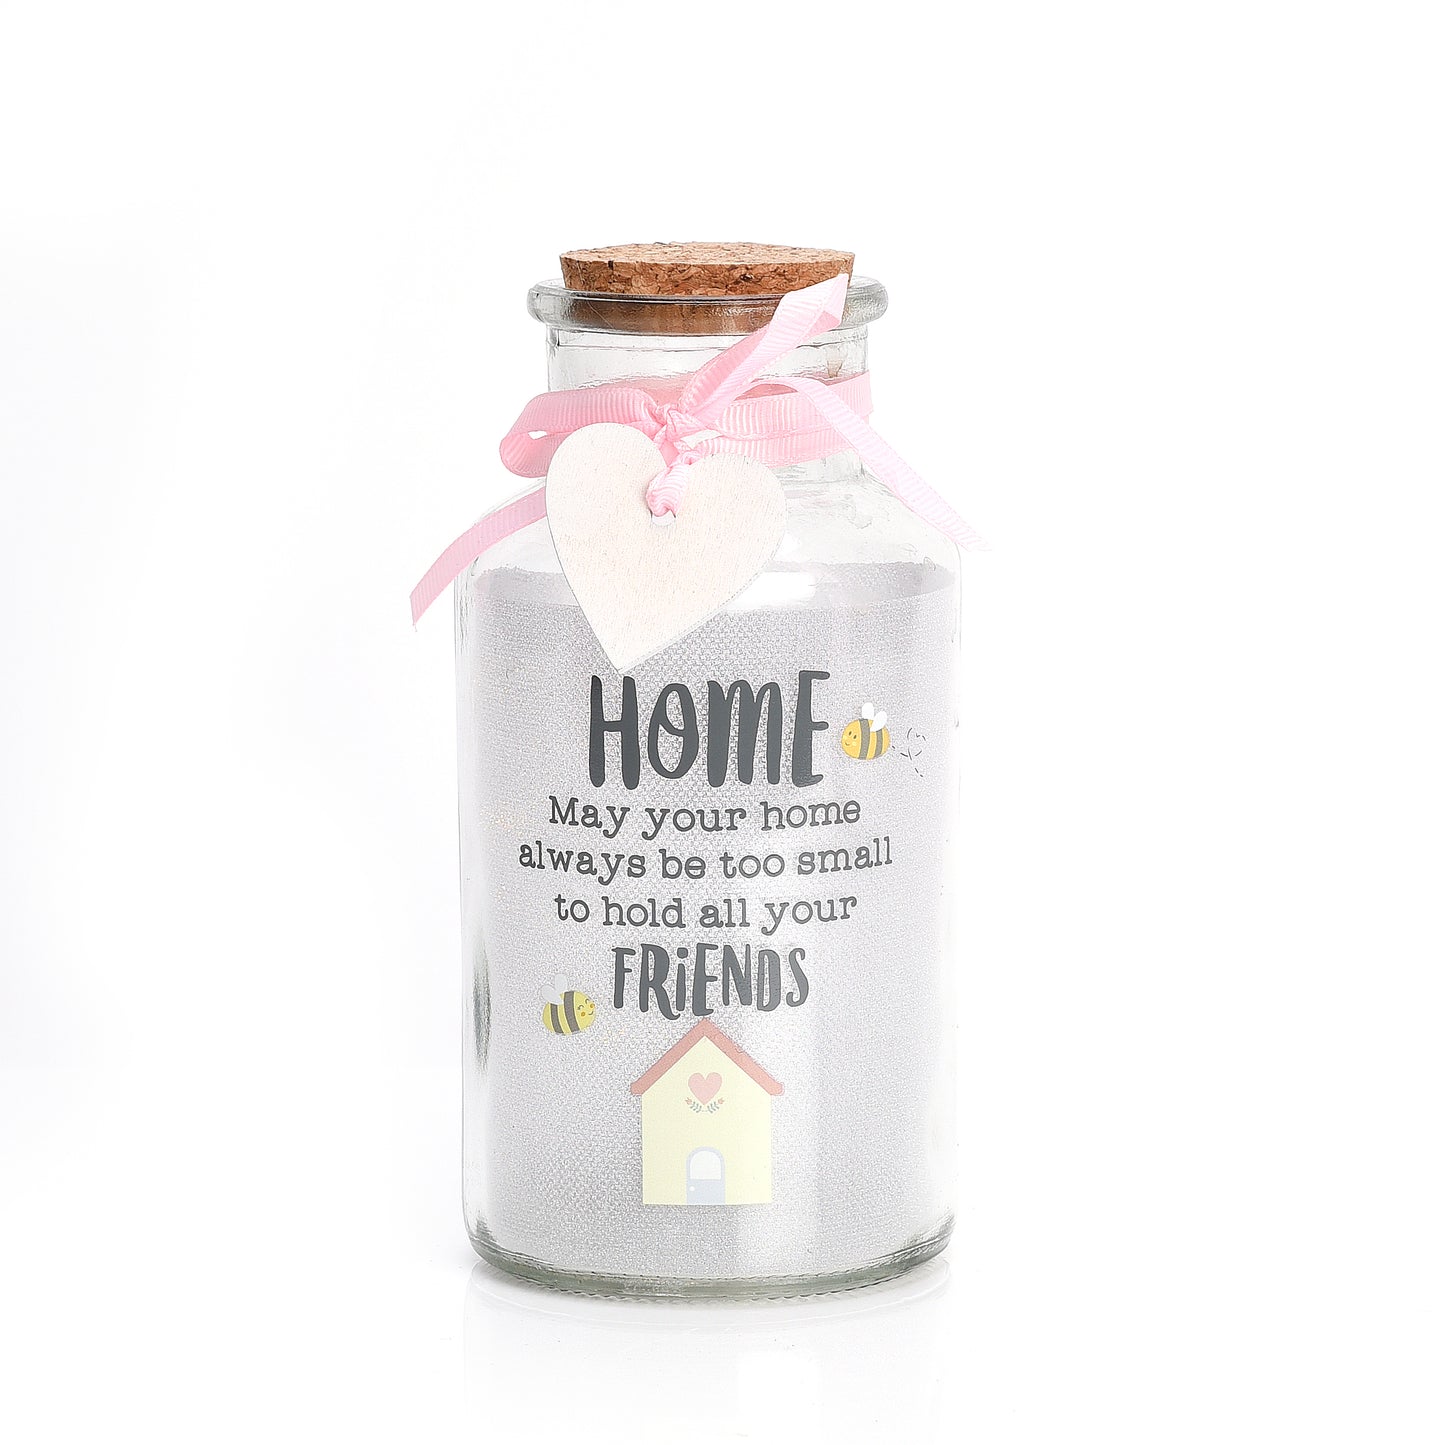 Love Life Home Full Of Friends Light Up Jar In White